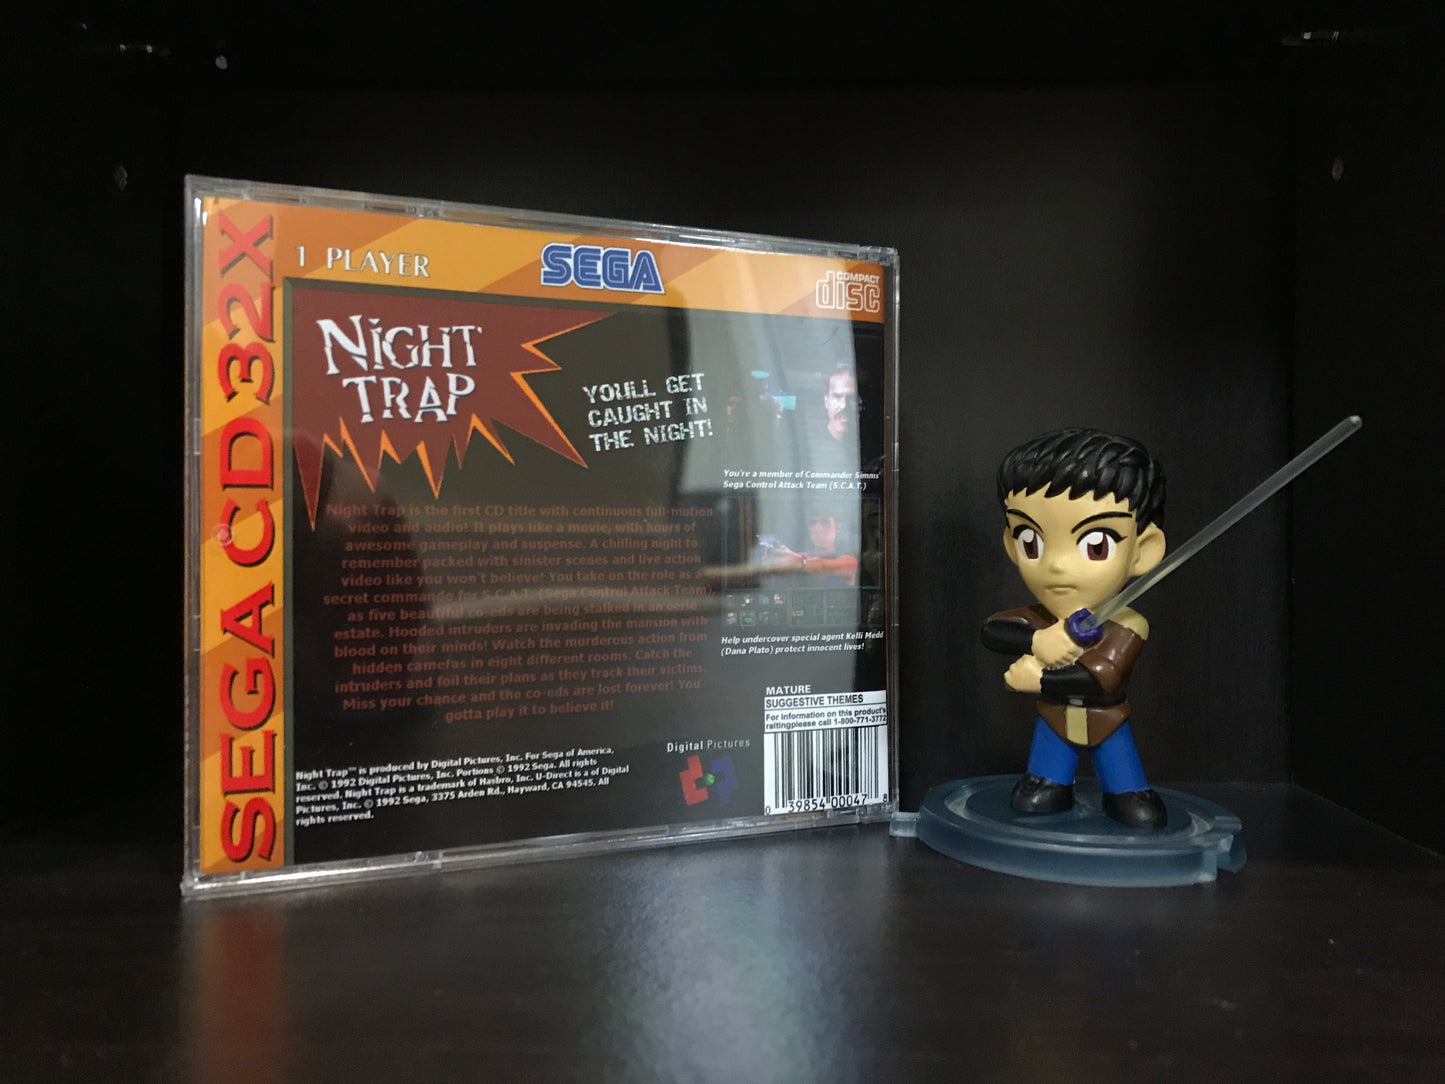 Night Trap [Sega CD 32X] Reproduction